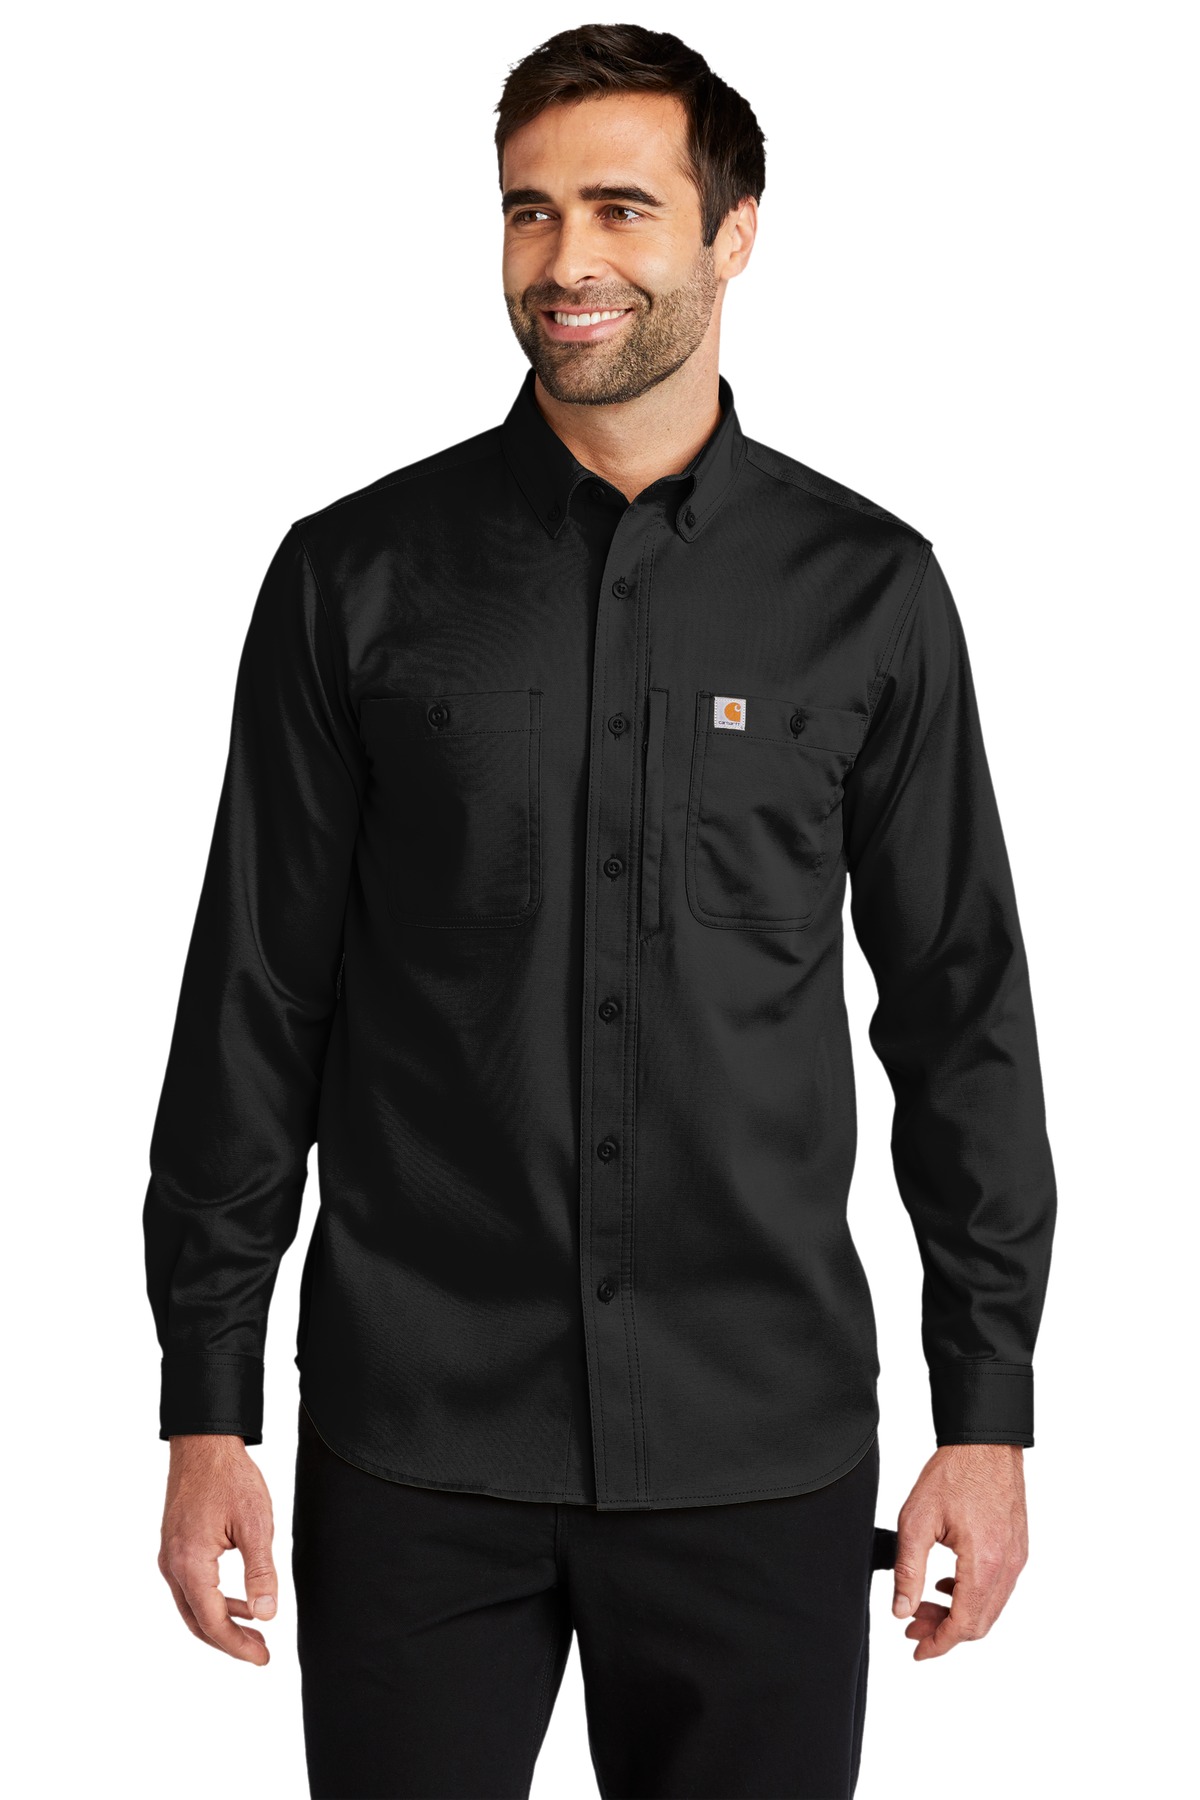 Carhartt Rugged Professional Series Long Sleeve Shirt-